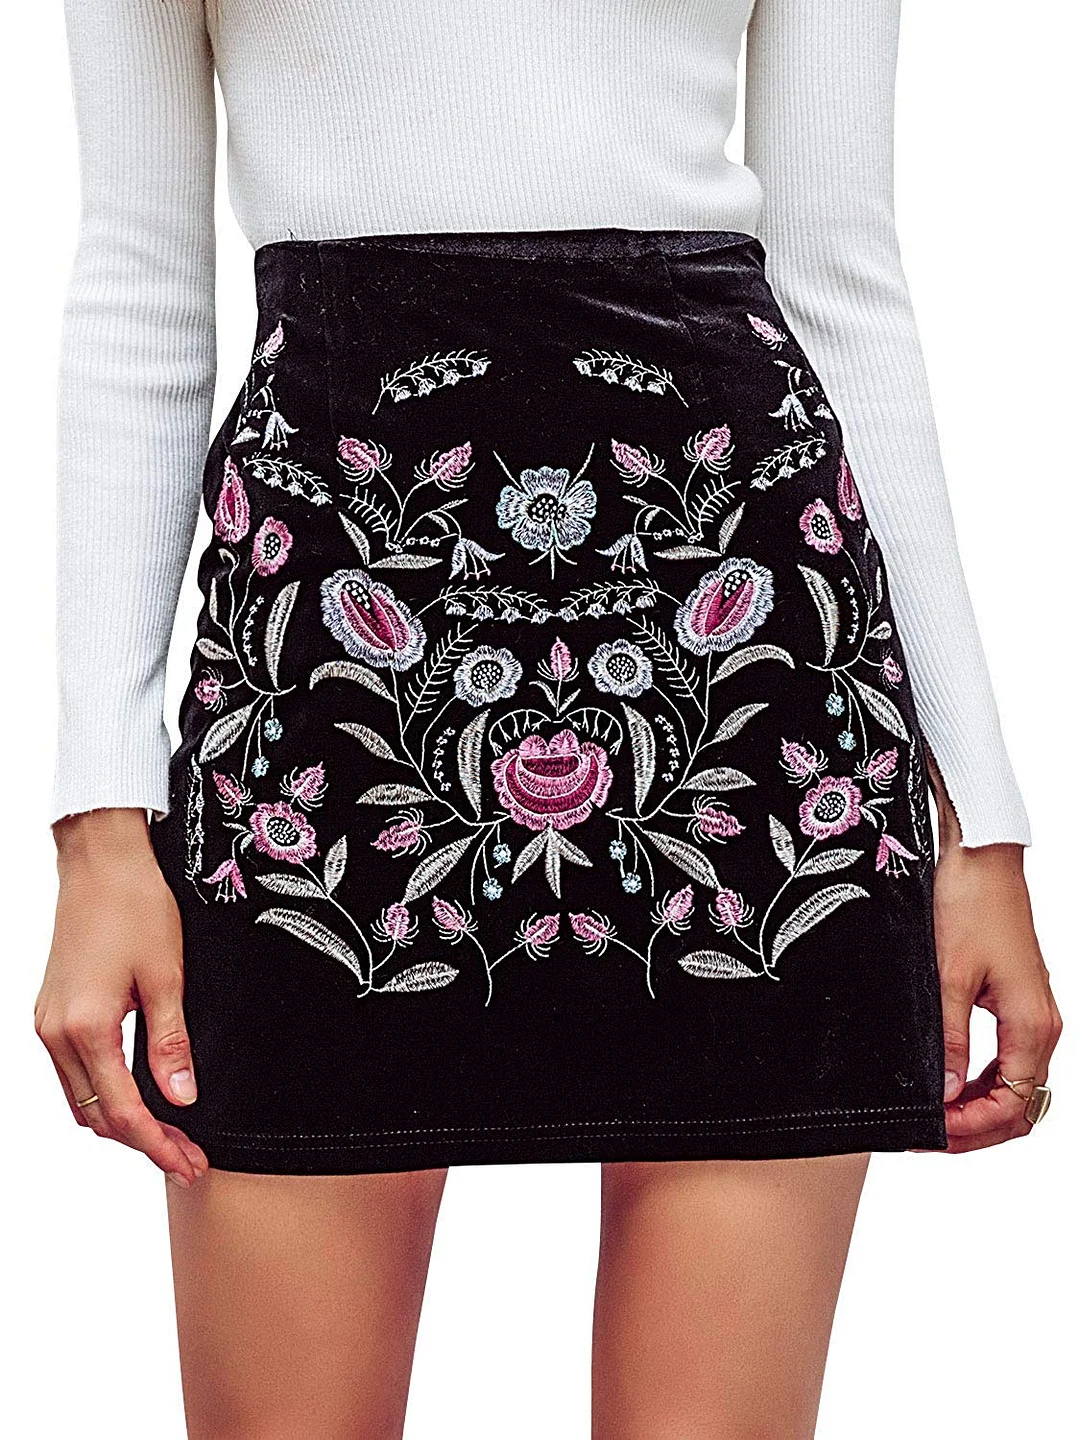 Women's High Waist Embroidered Mini Skirt Boho Floral Pencil Skirt